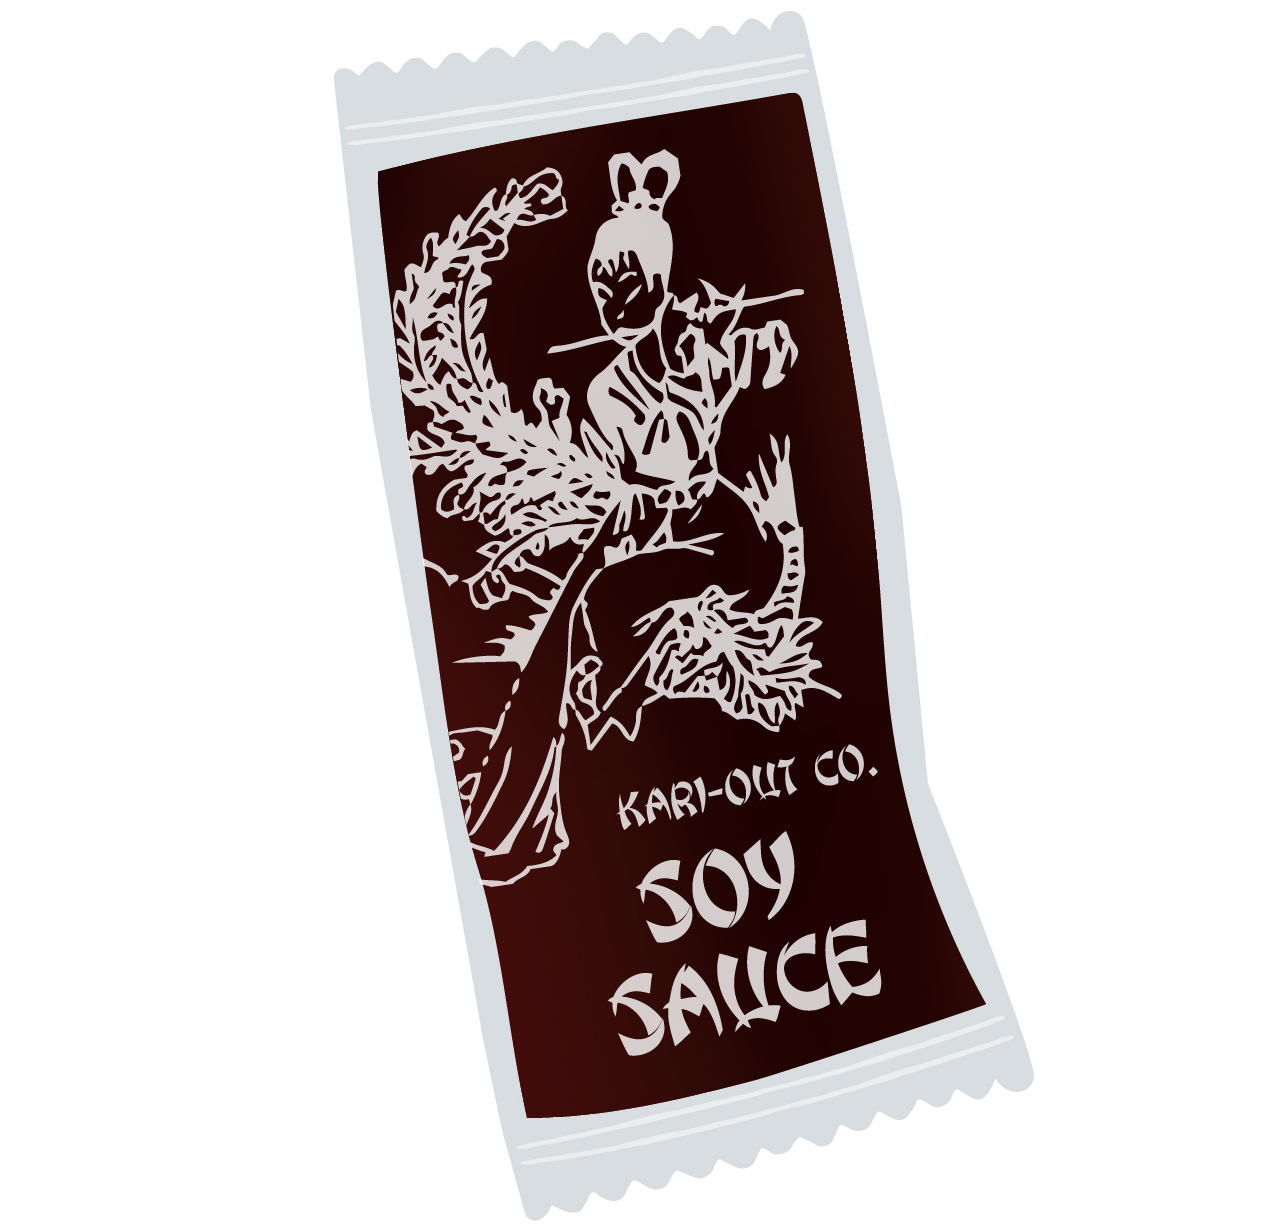 Kari-Out soy sauce packet